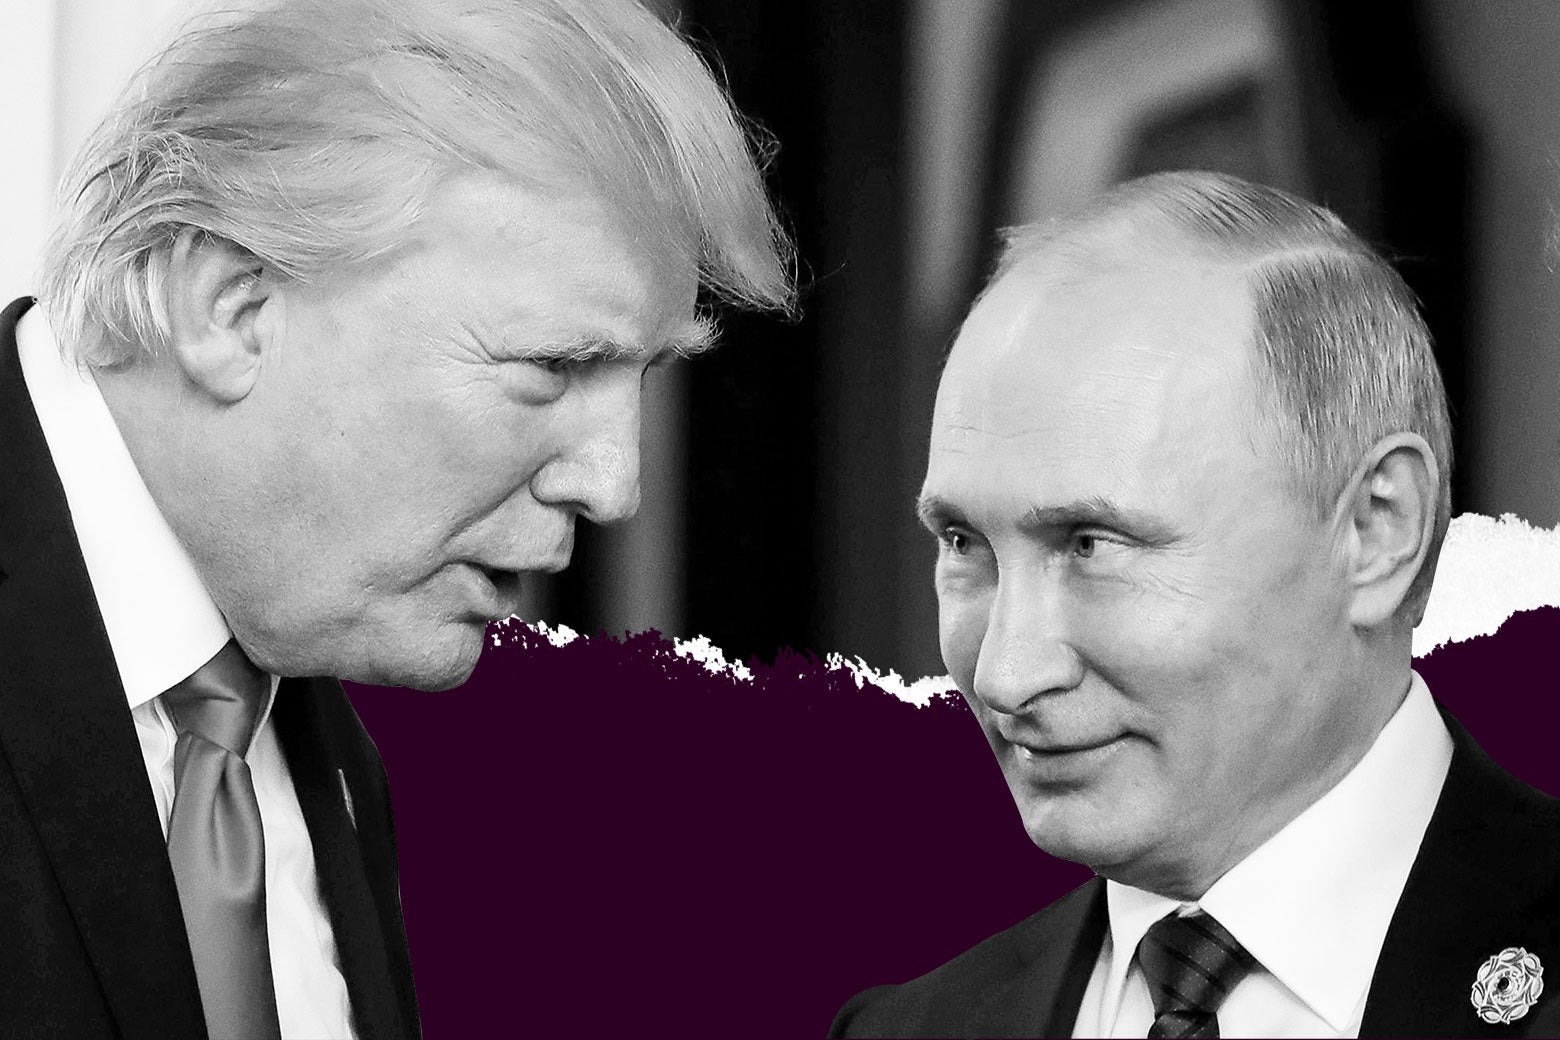 Donald Trump leans over to talk with Vladimir Putin.